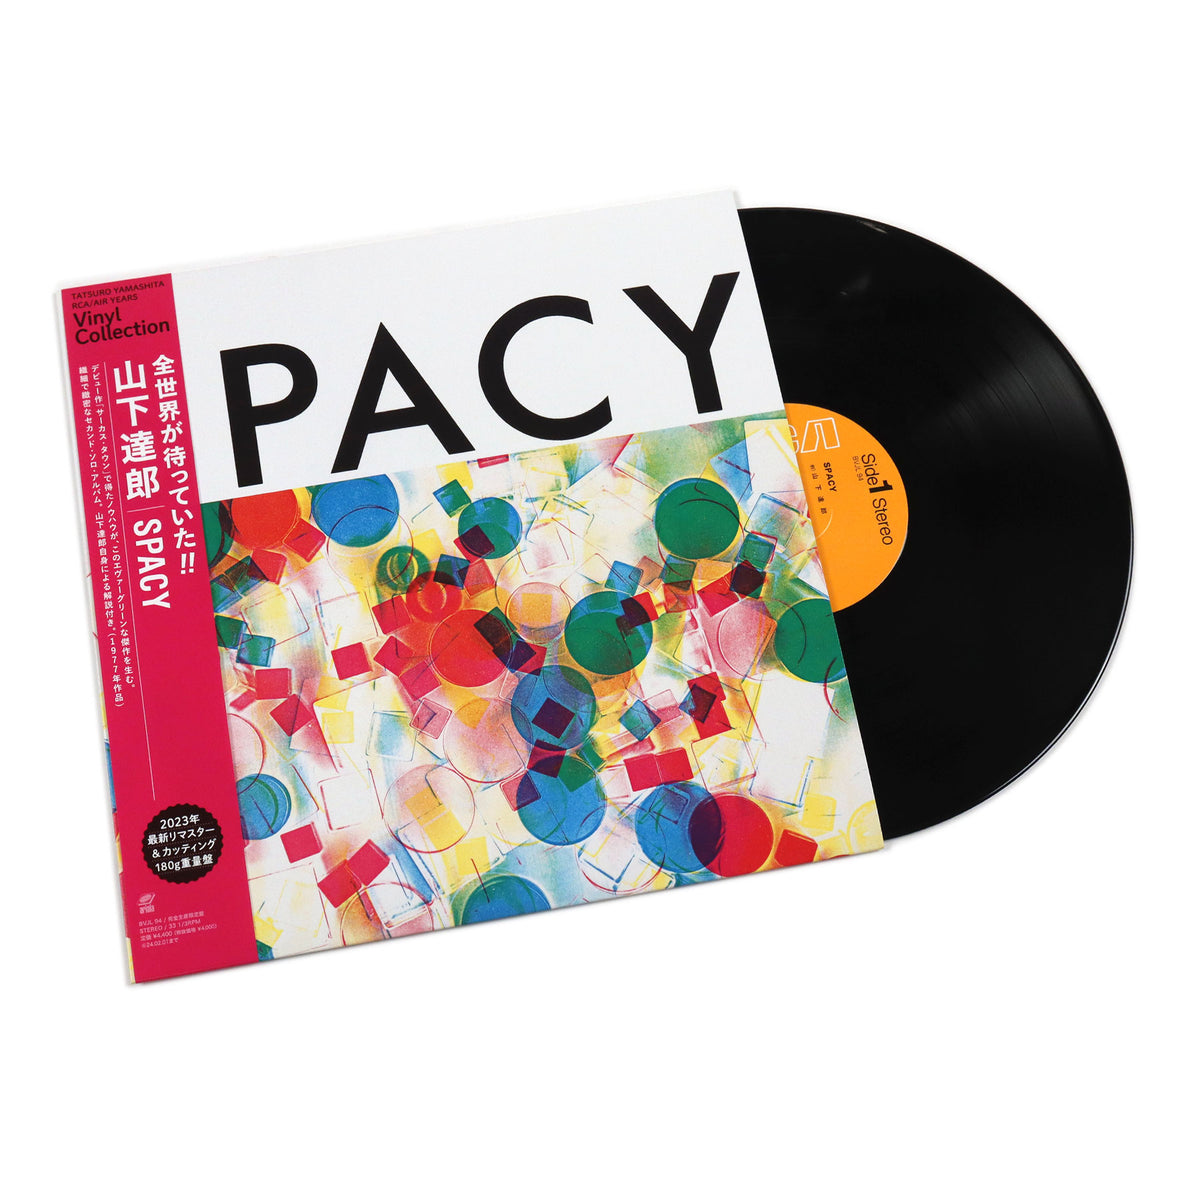 Tatsuro Yamashita: Spacy (180g, Japan Import) Vinyl LP